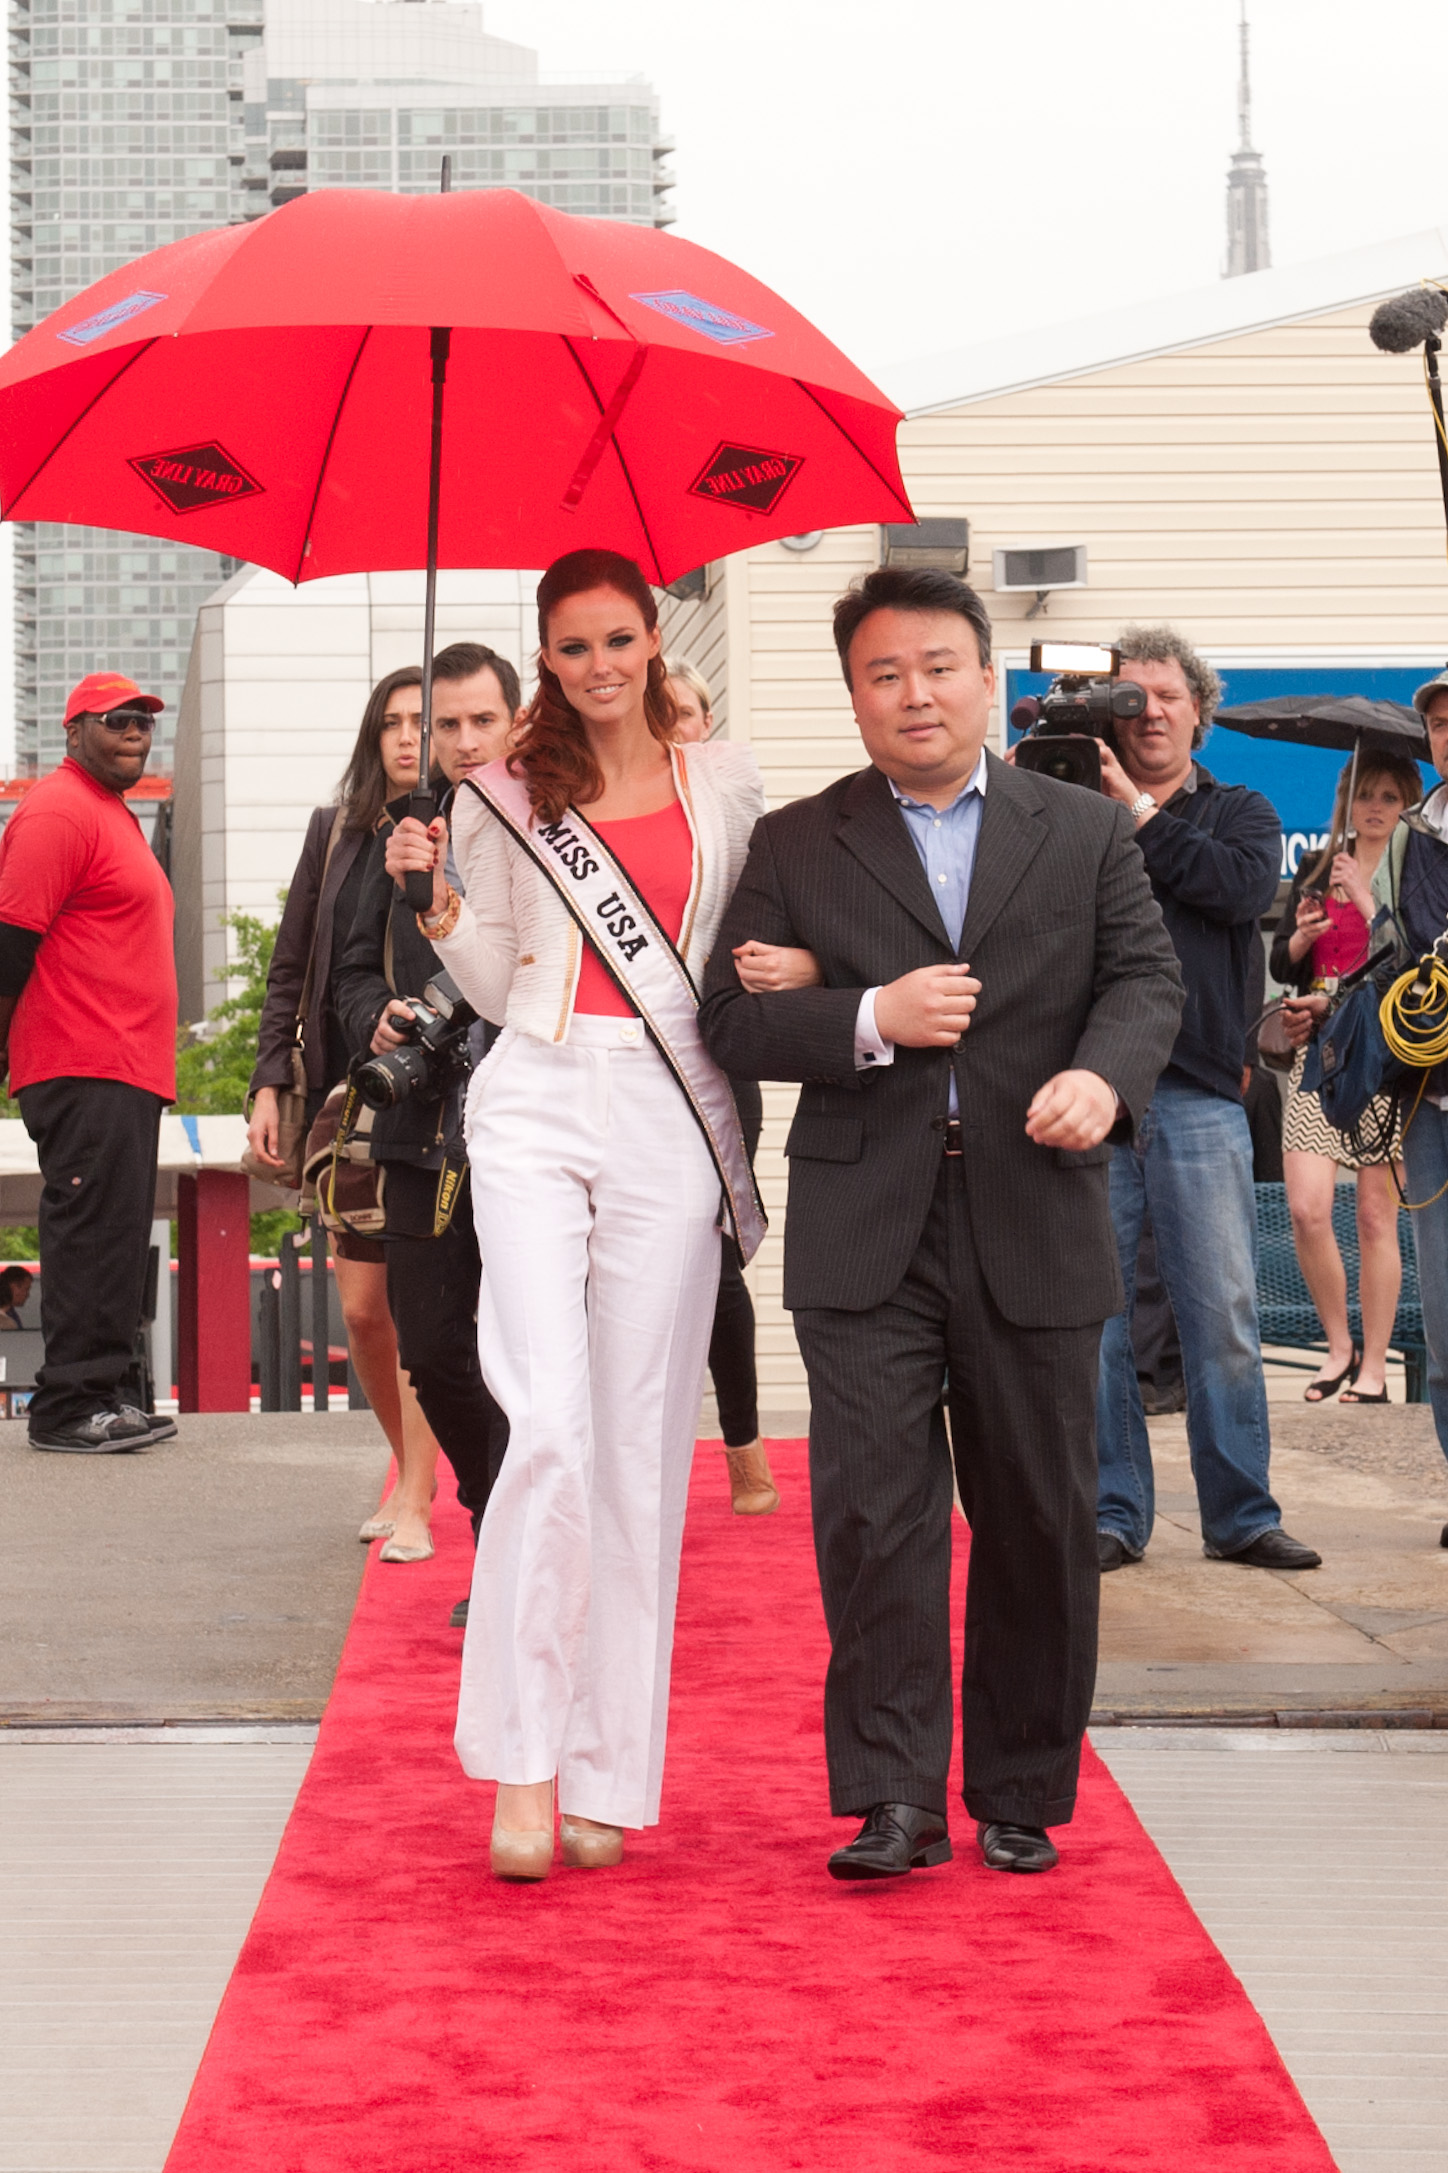 David W. Chien with Miss USA 2012 Alyssa Campanella at CitySightseeing New York event (May 8th, 2012).